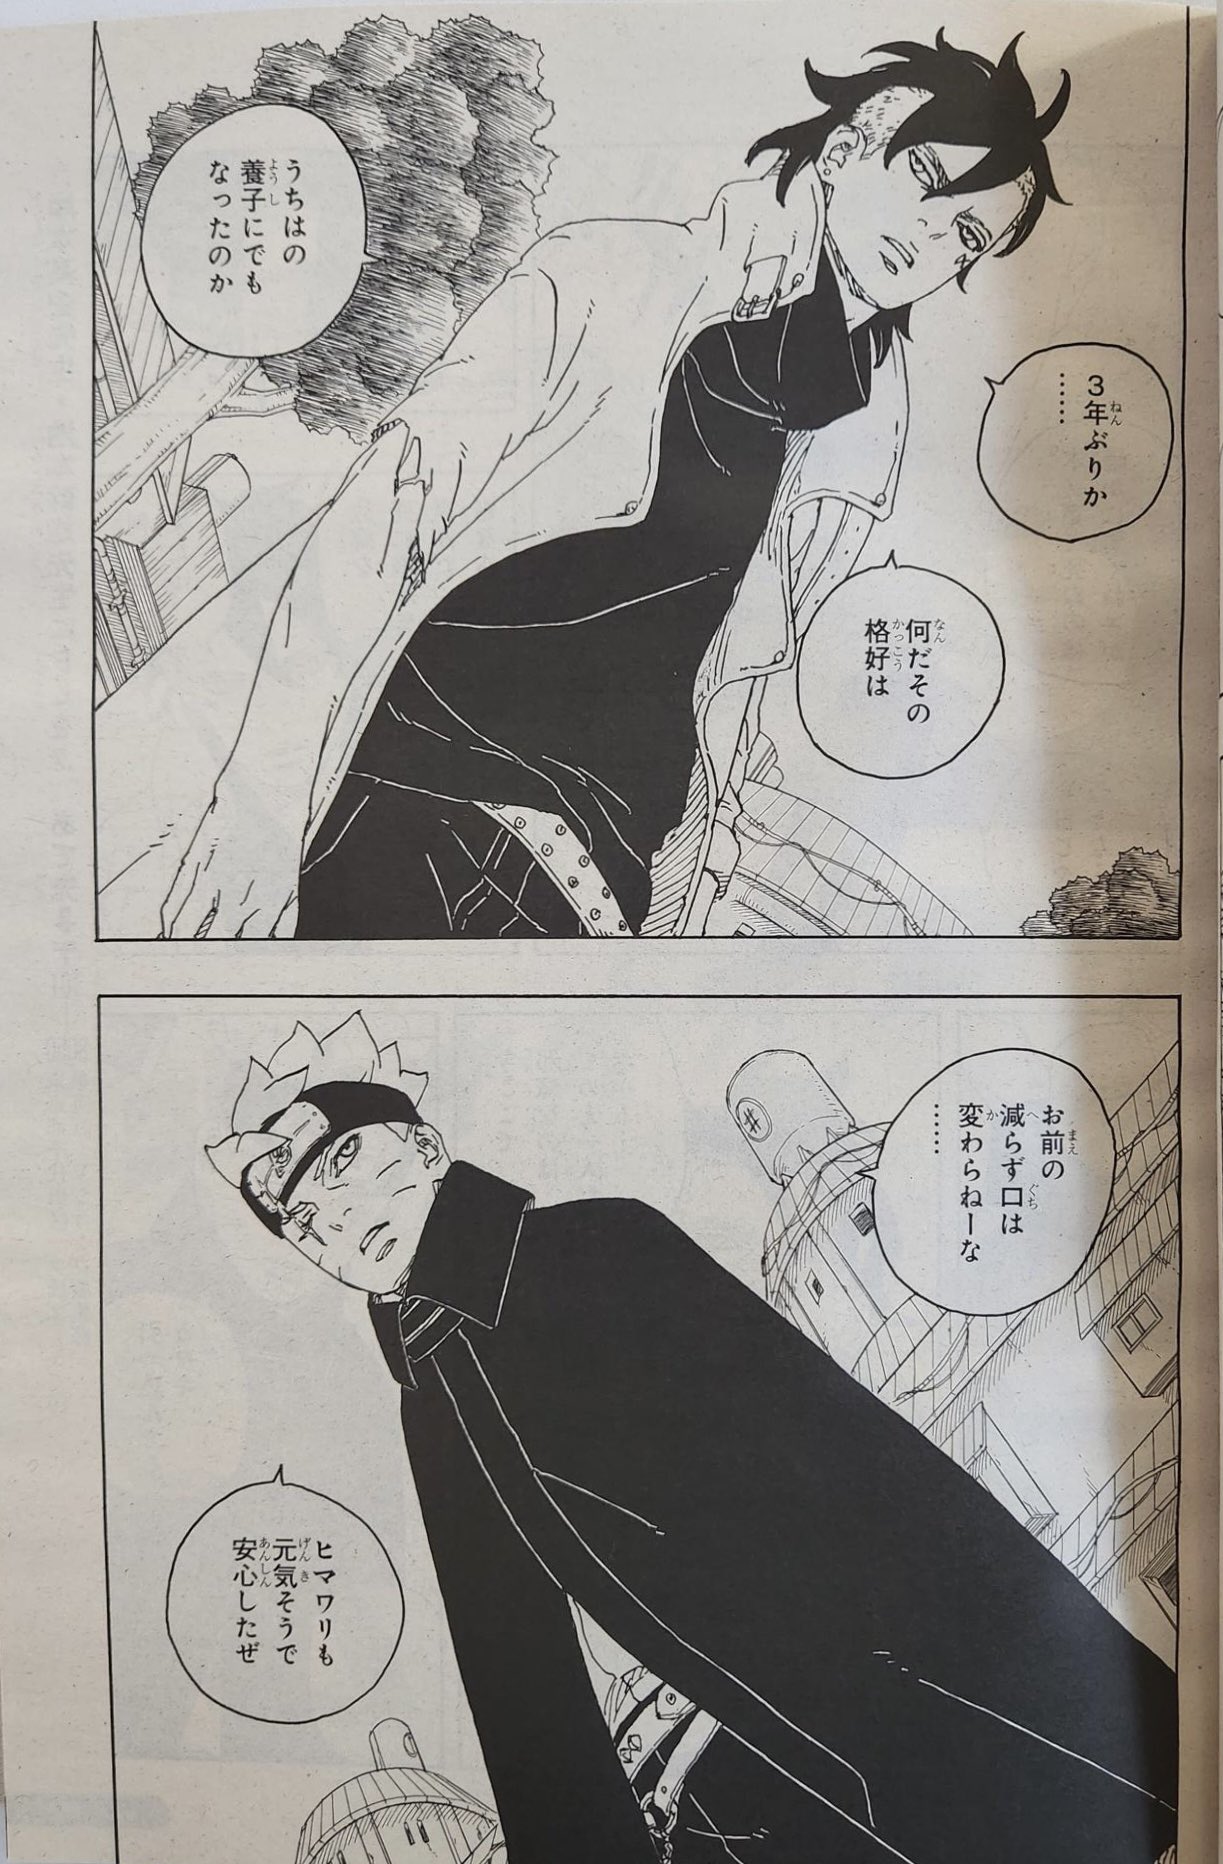 Boruto Chapter 83 Spoilers: The Uzuhiko Showdown and Ten Tails' Return -  IMDb